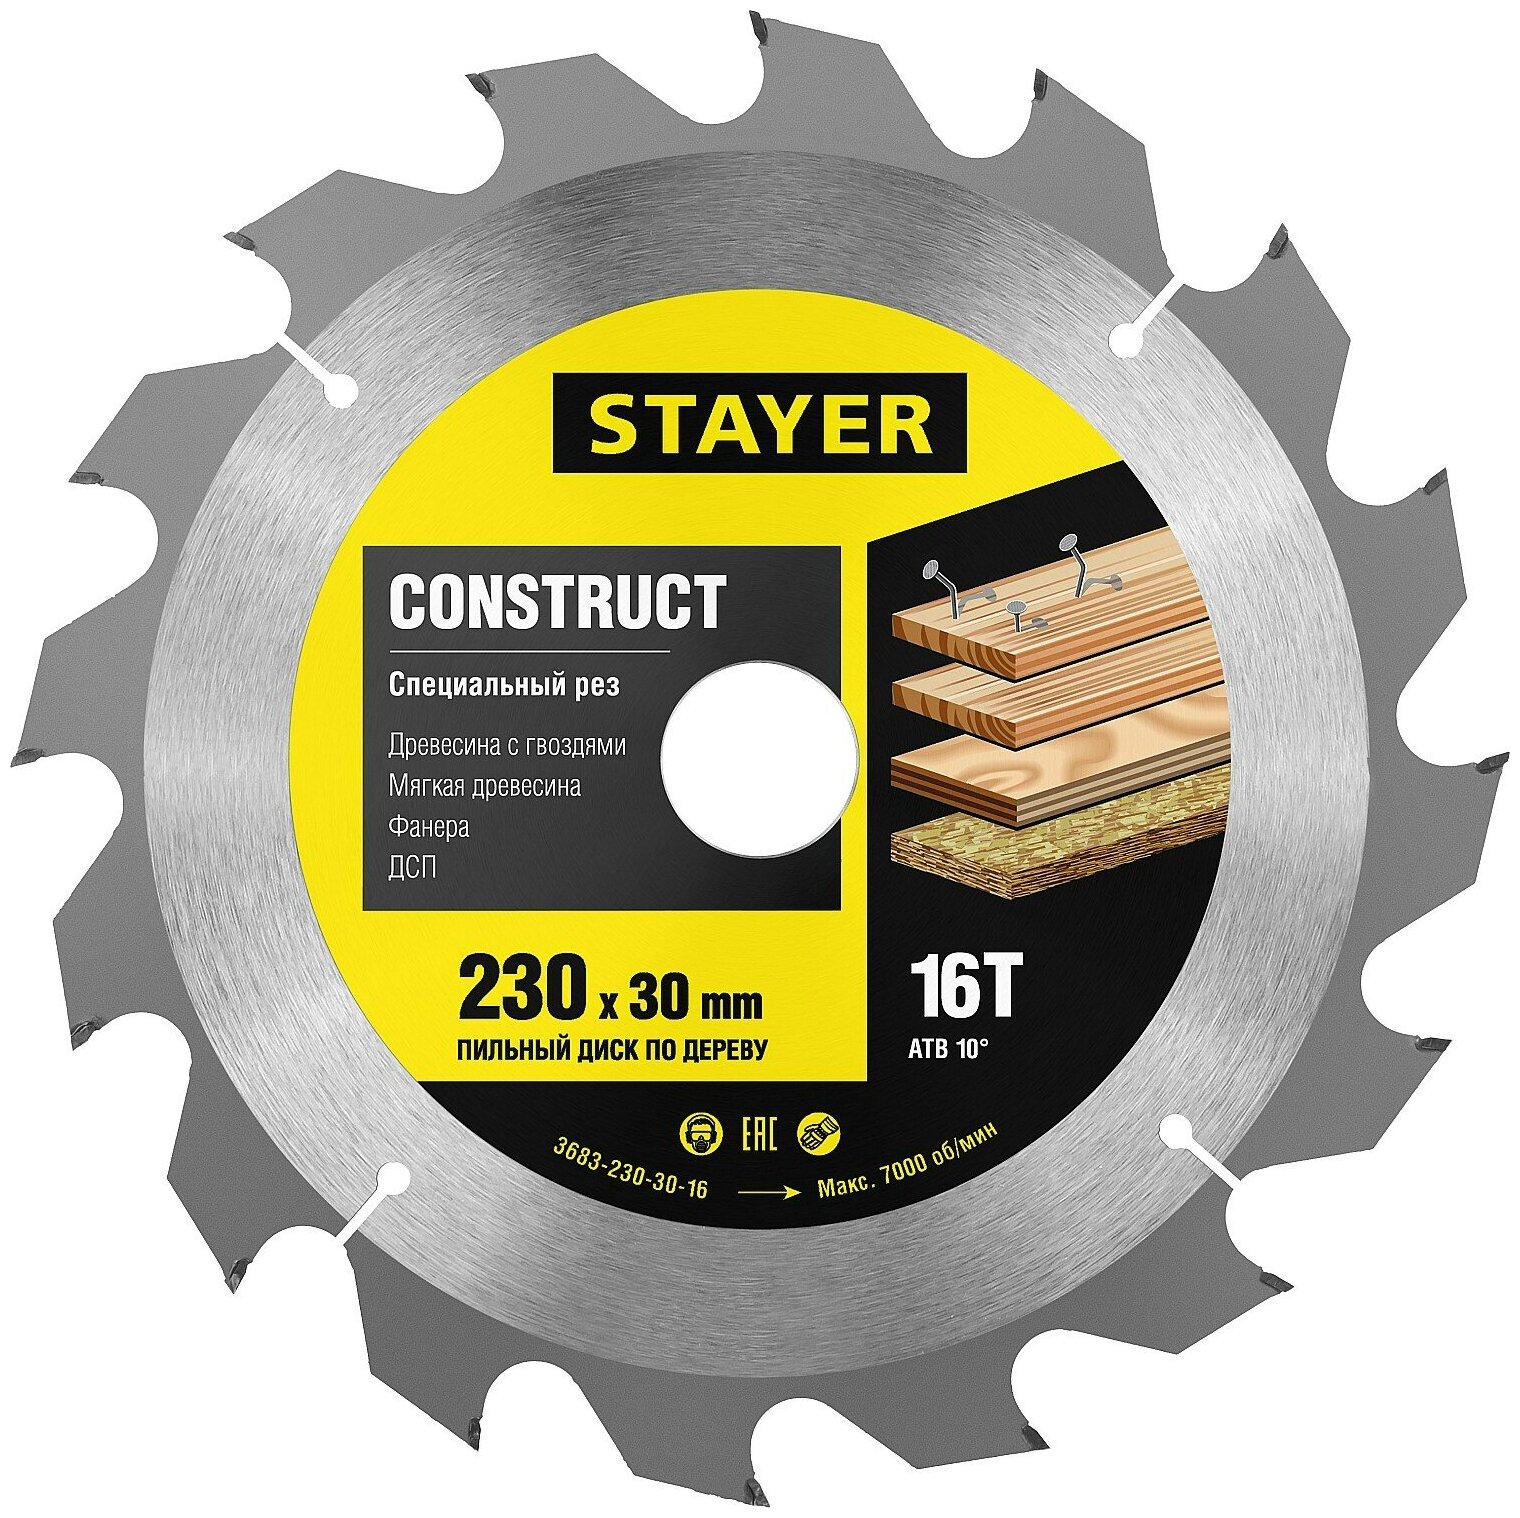 Пильный диск STAYER Construct 3683-230-30-16 230х30 мм